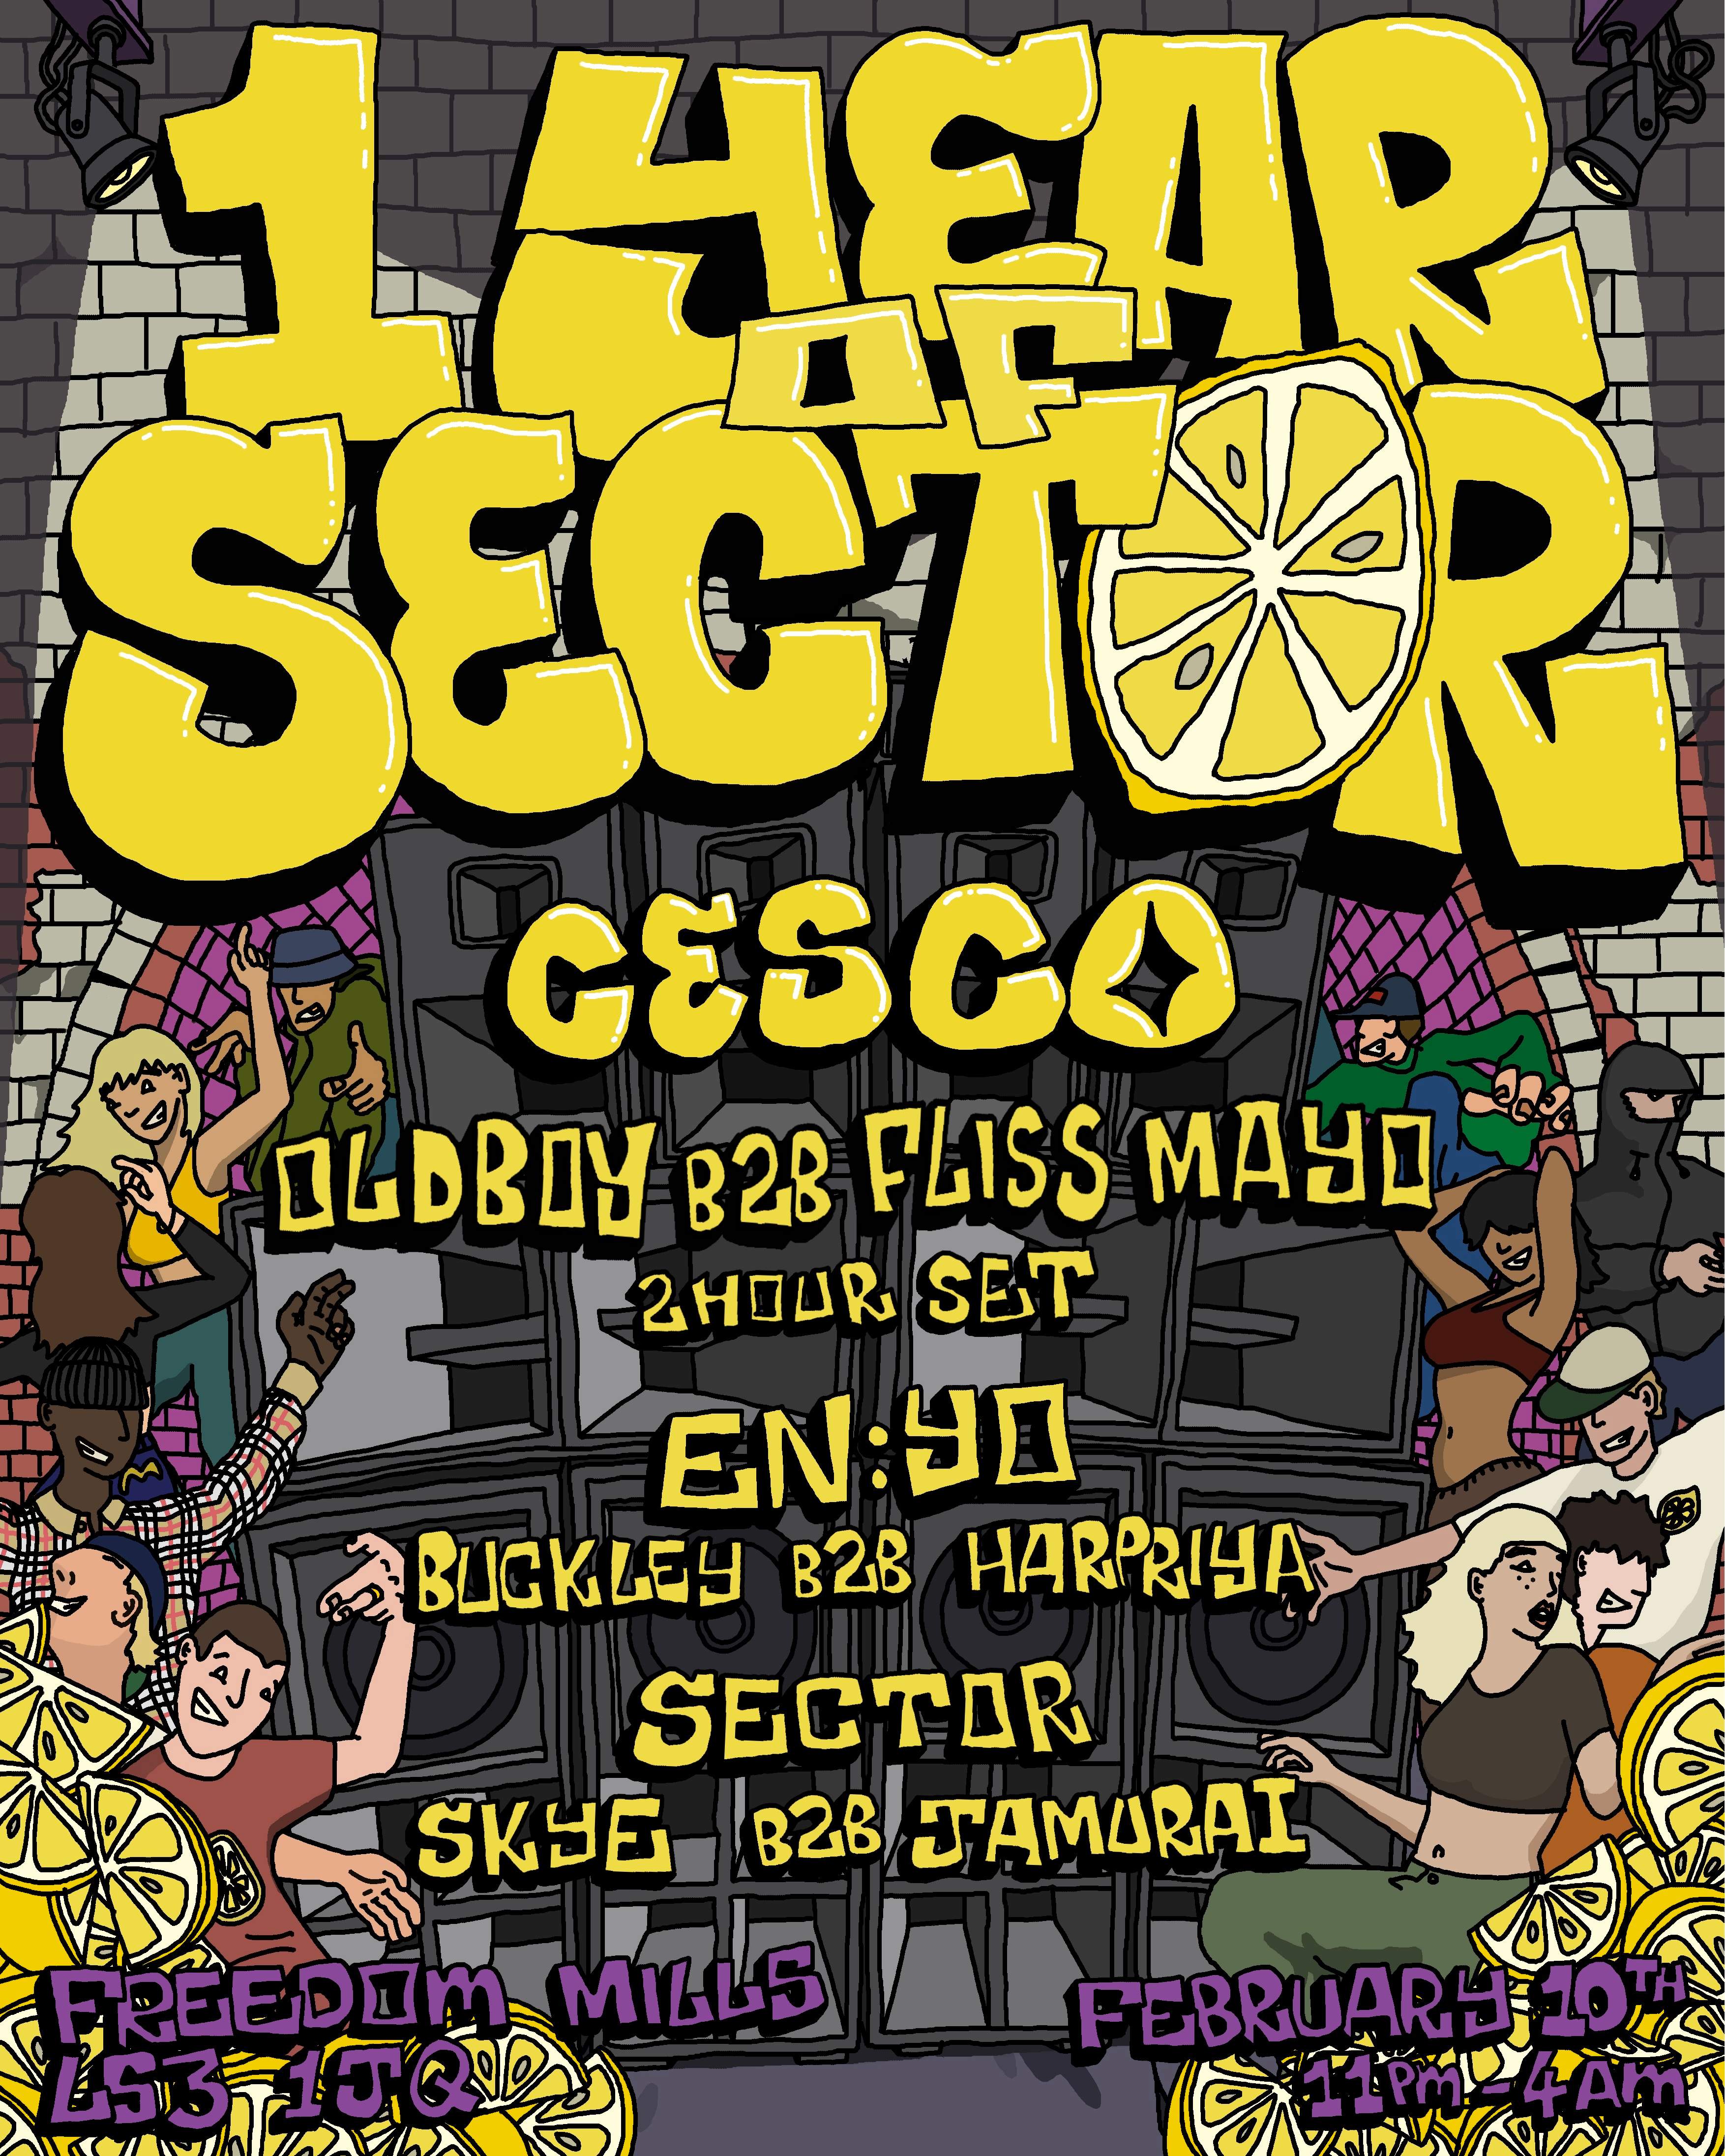 1 Year of Sector: Cesco, Old Boy B2B Fliss Mayo, En:yo - フライヤー表